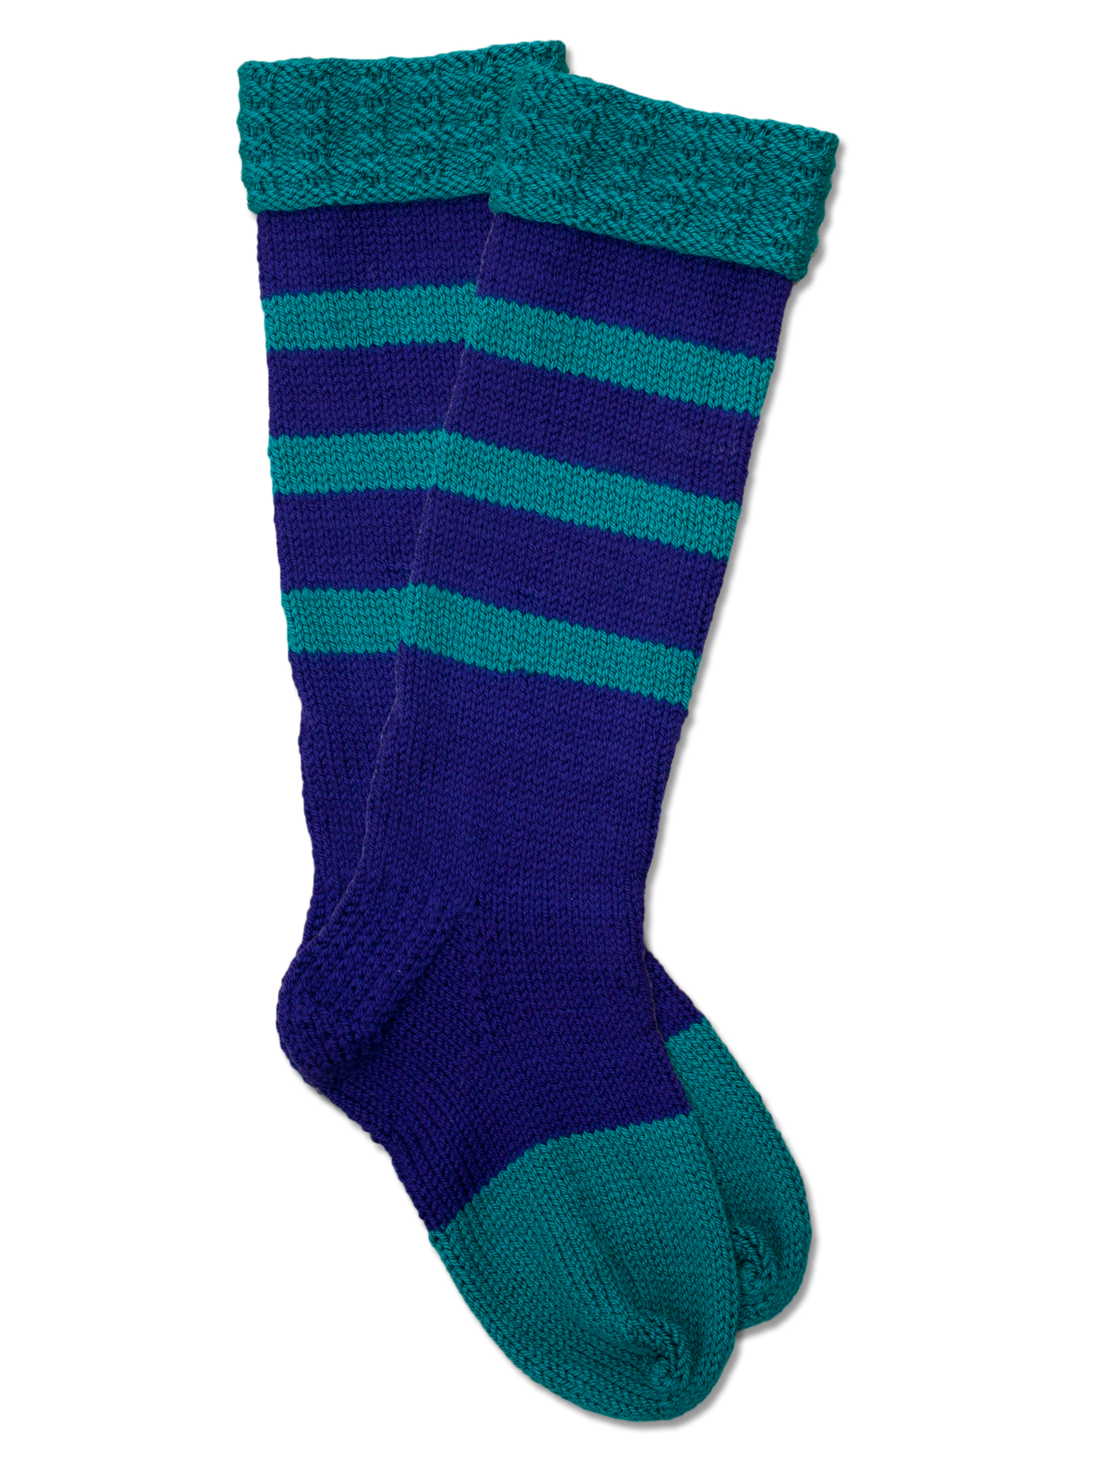 Wellie Warmers Boot Socks PDF Knitting Pattern